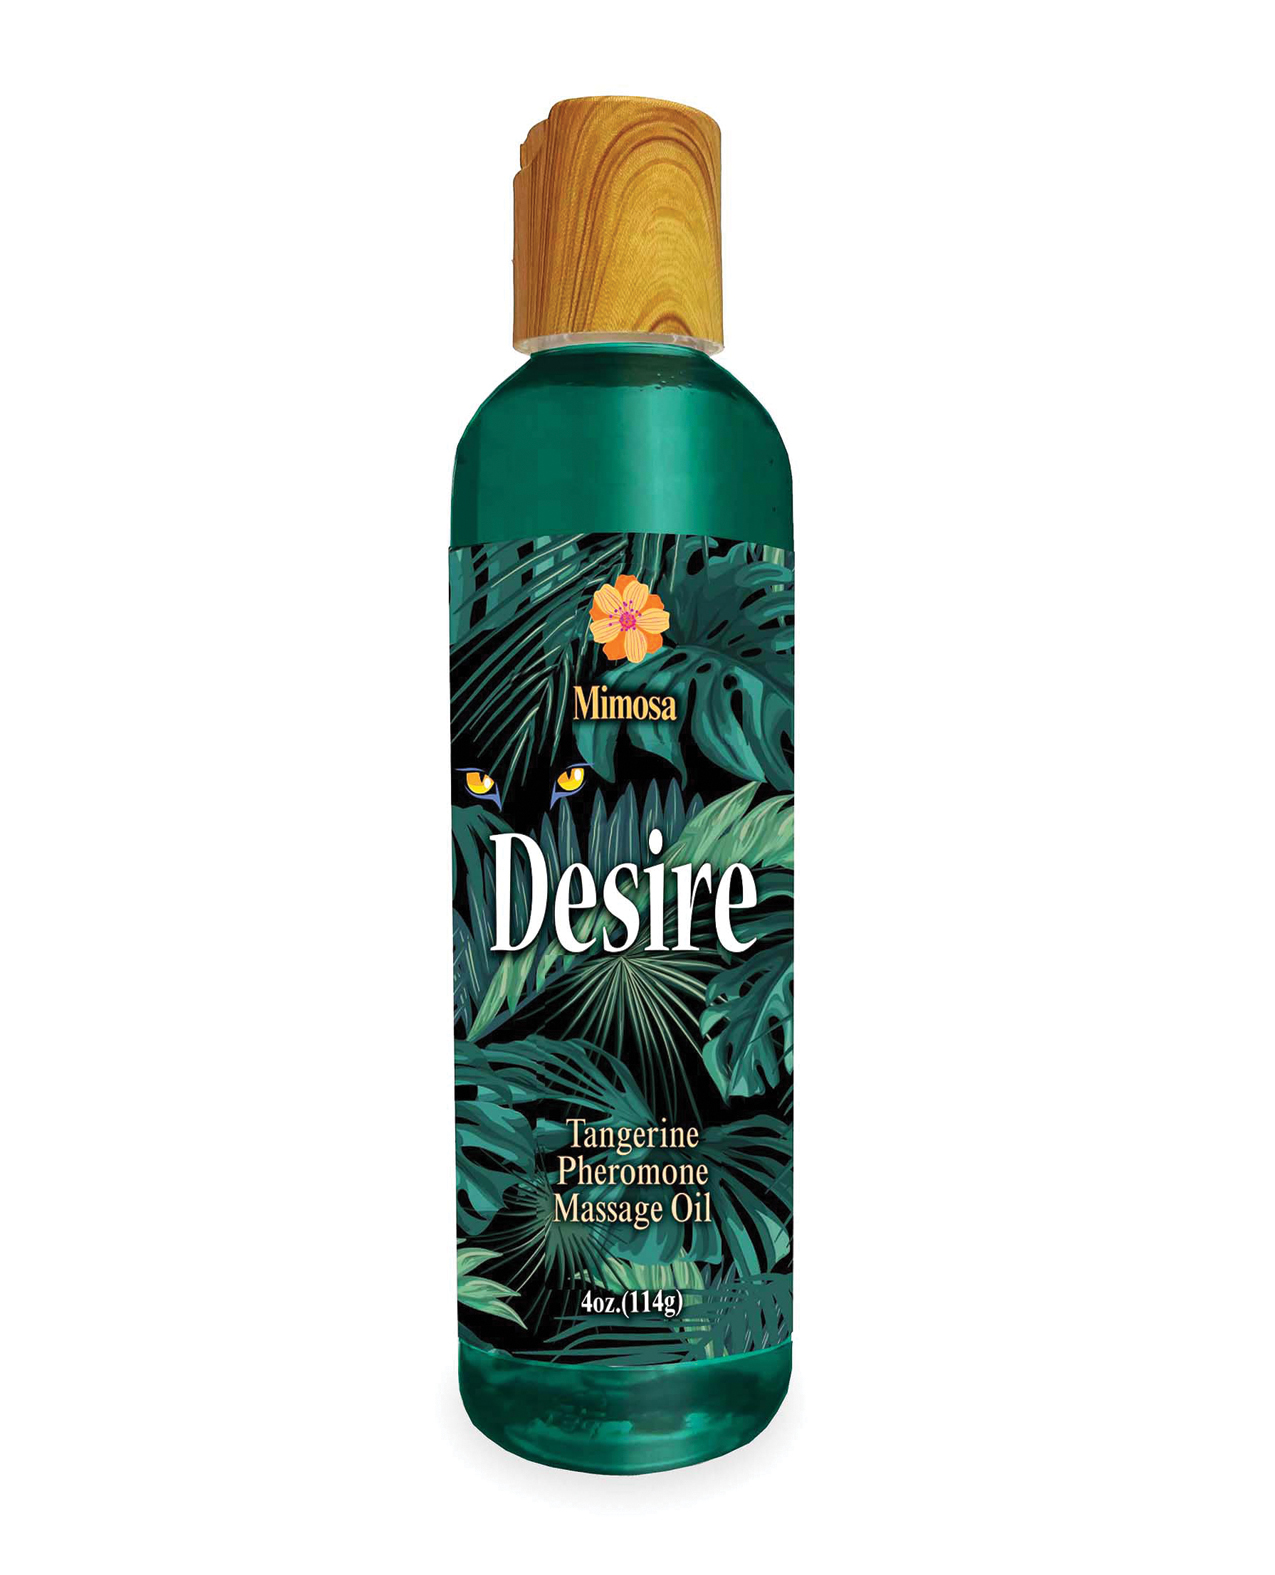 Desire Pheromone Massage Oil - 4 oz Tangerine